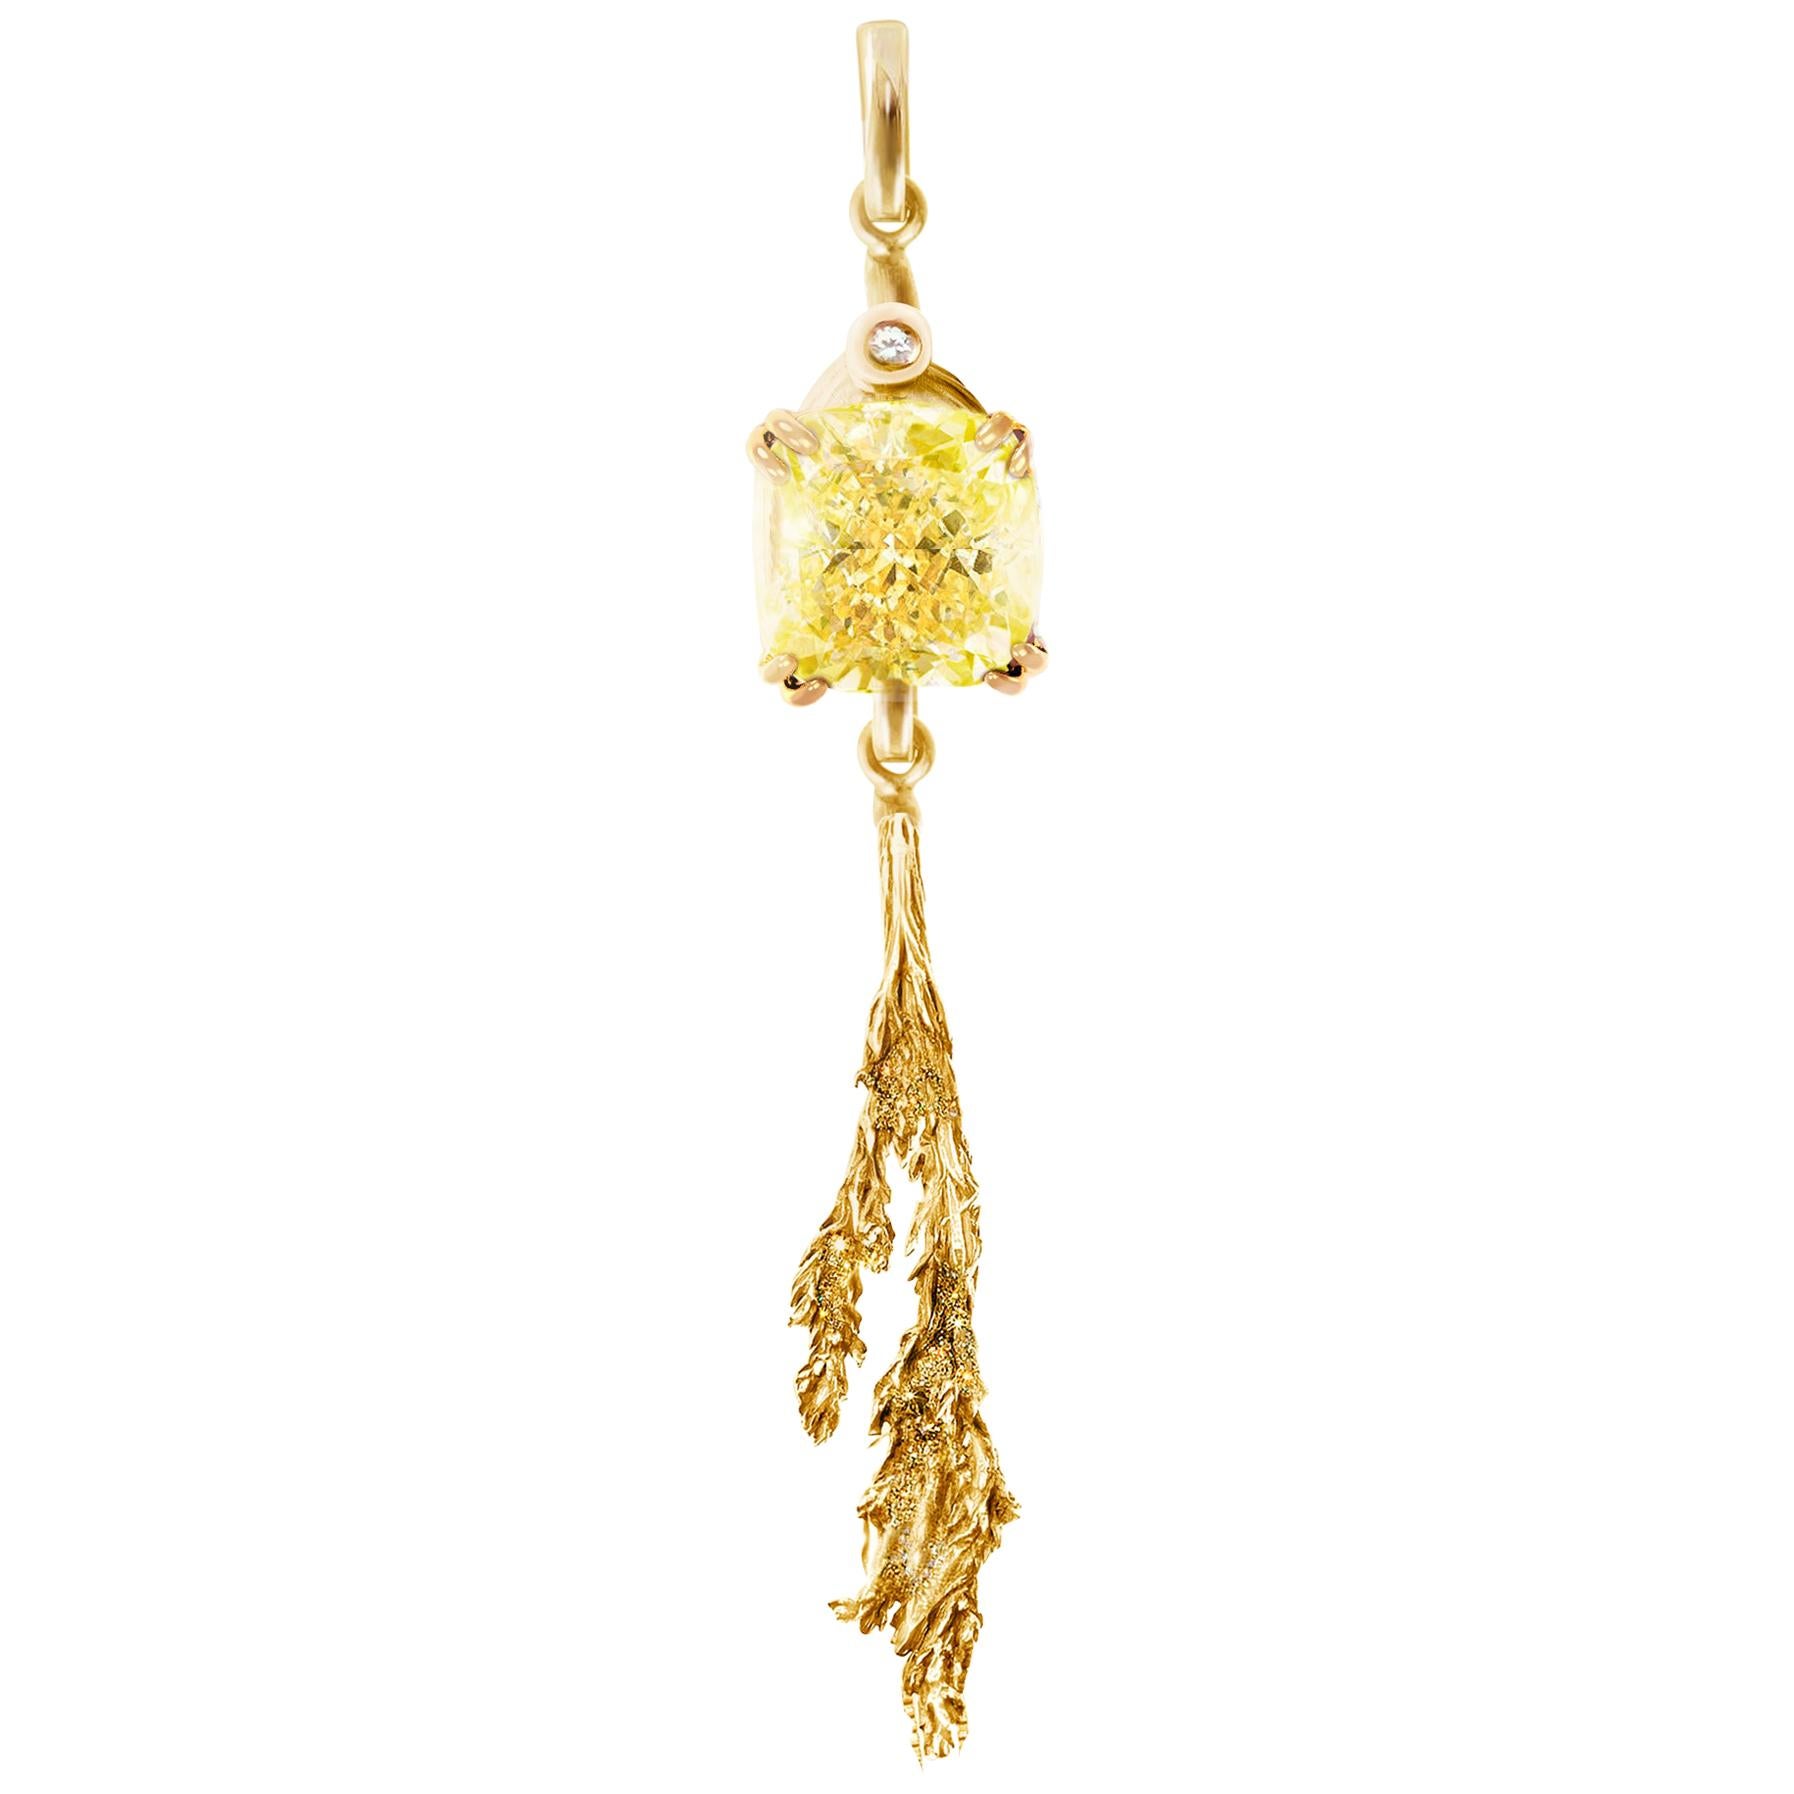 Two Carats Yellow Diamond Pendant Necklace in Eighteen Karat Yellow Gold